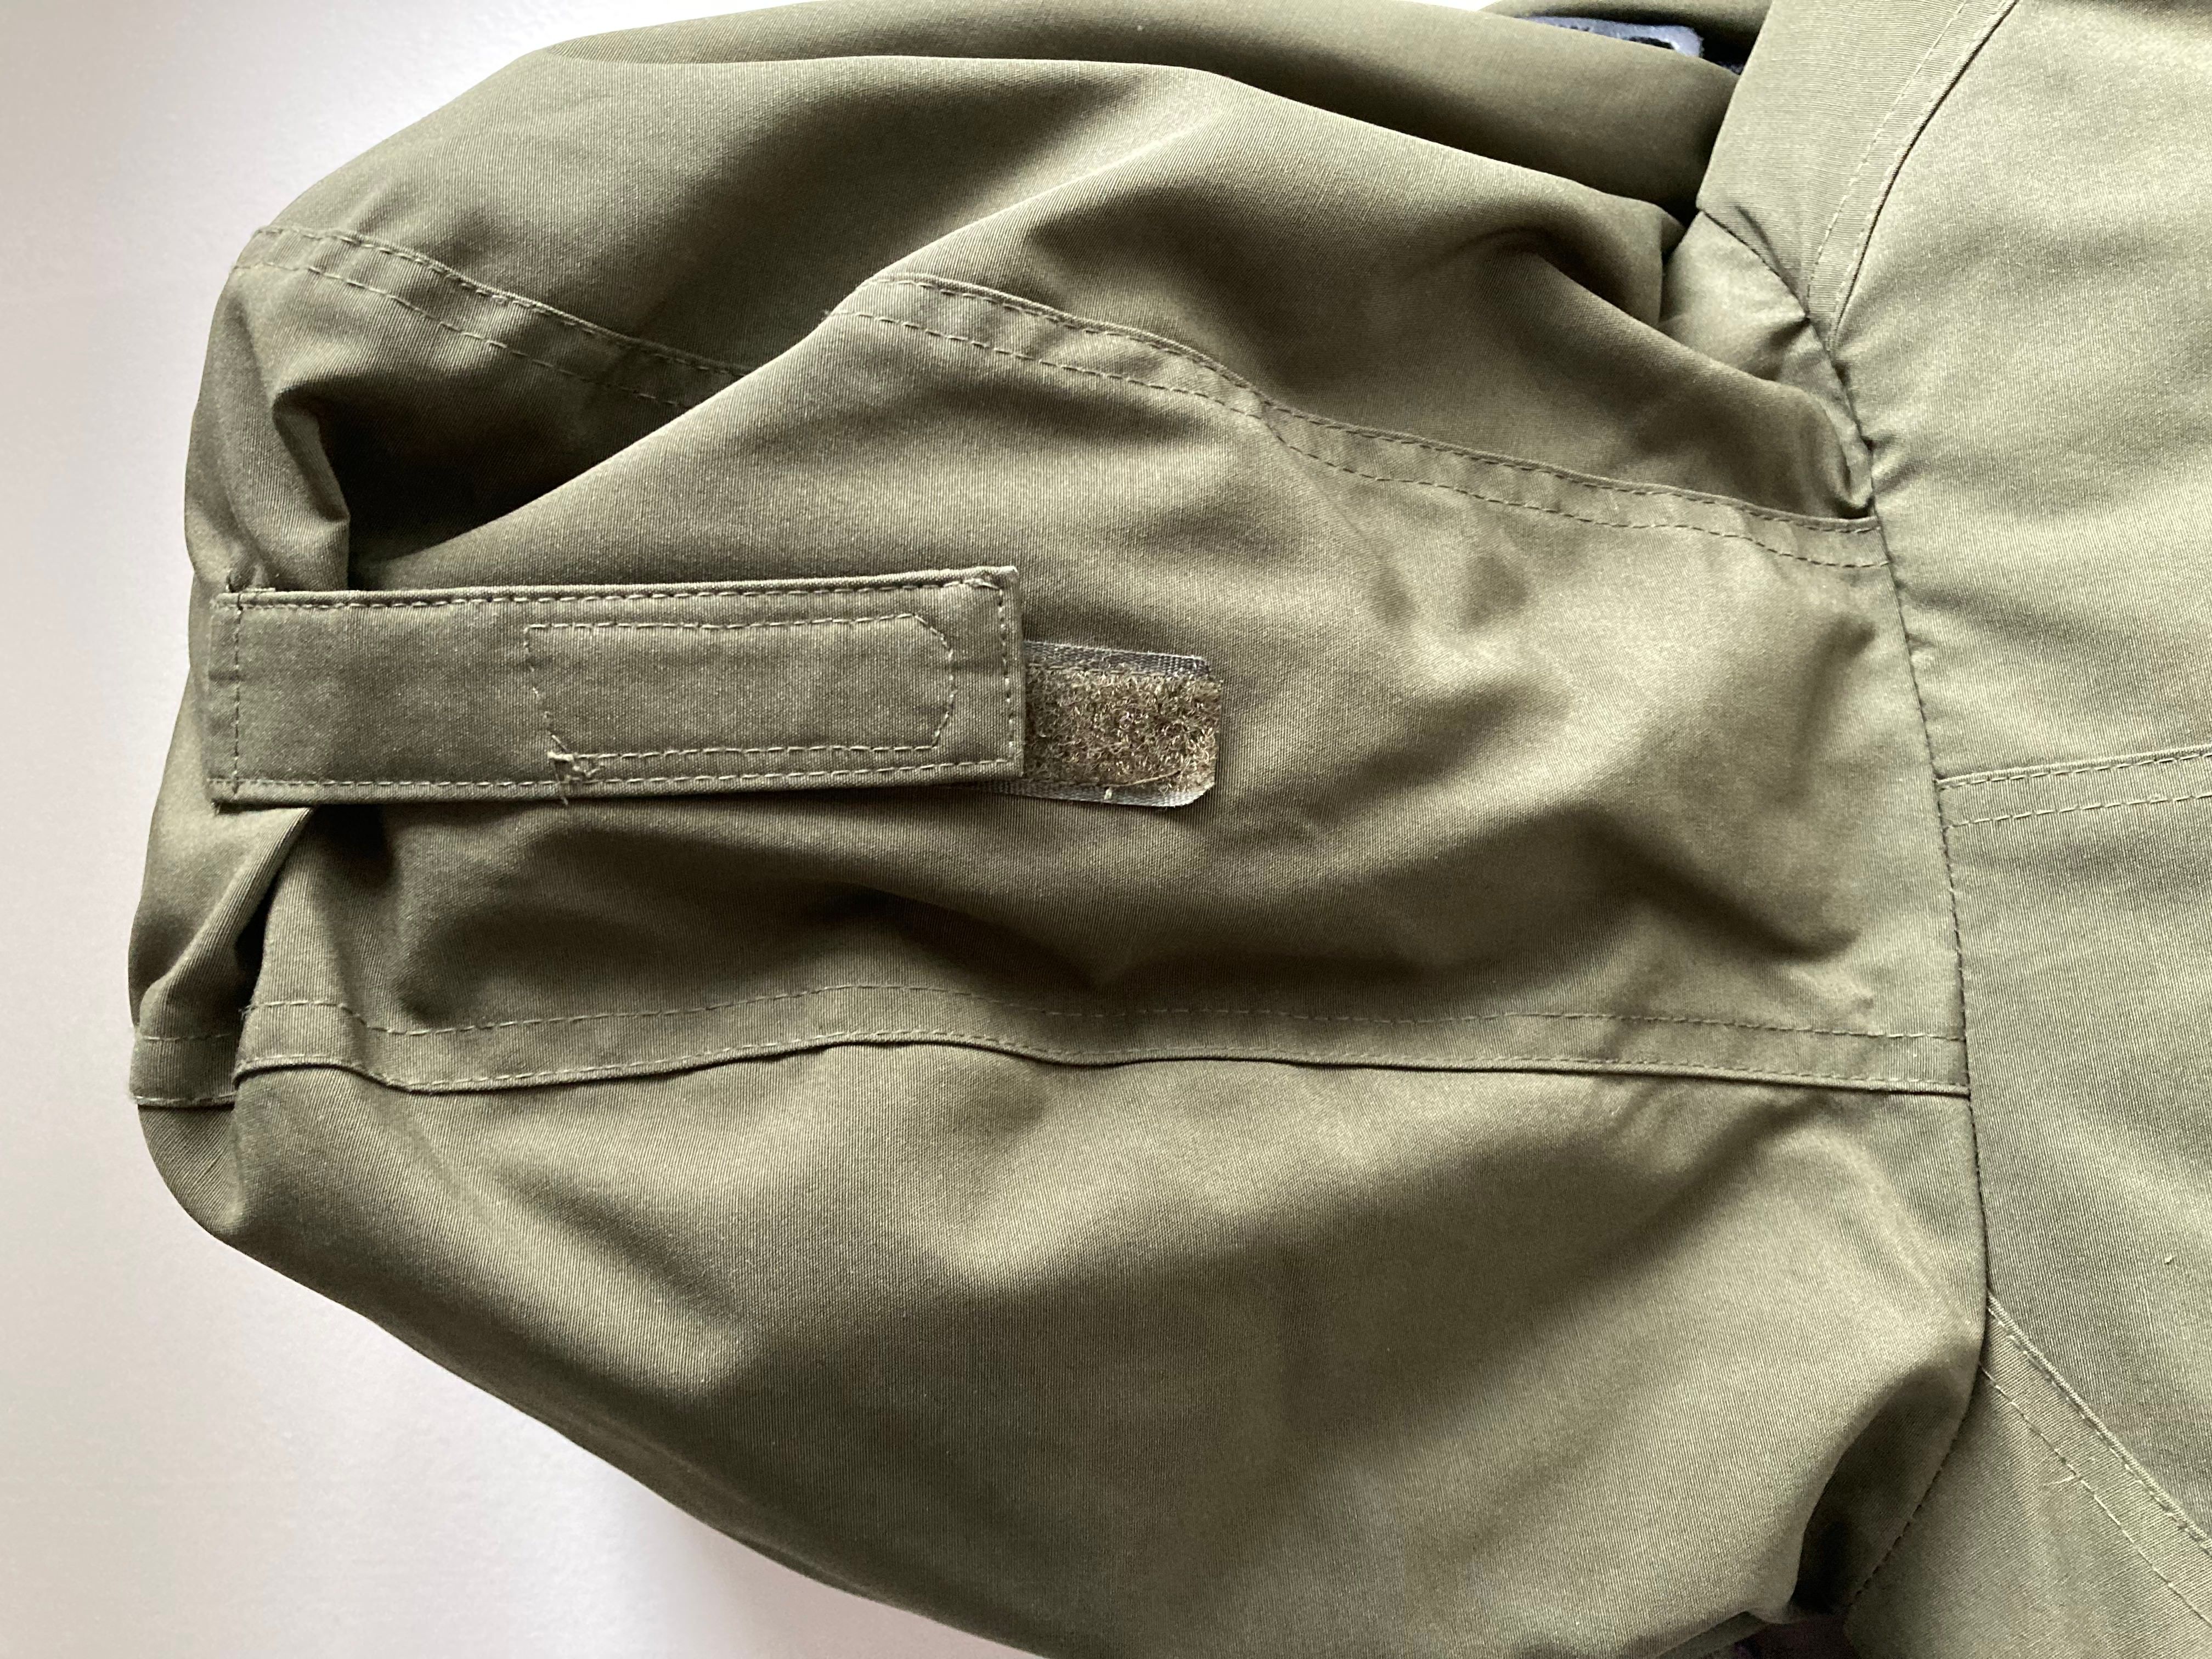 Penfield Kingman Jacket - Winter Coat Size US S / EU 44-46 / 1 - 8 Thumbnail